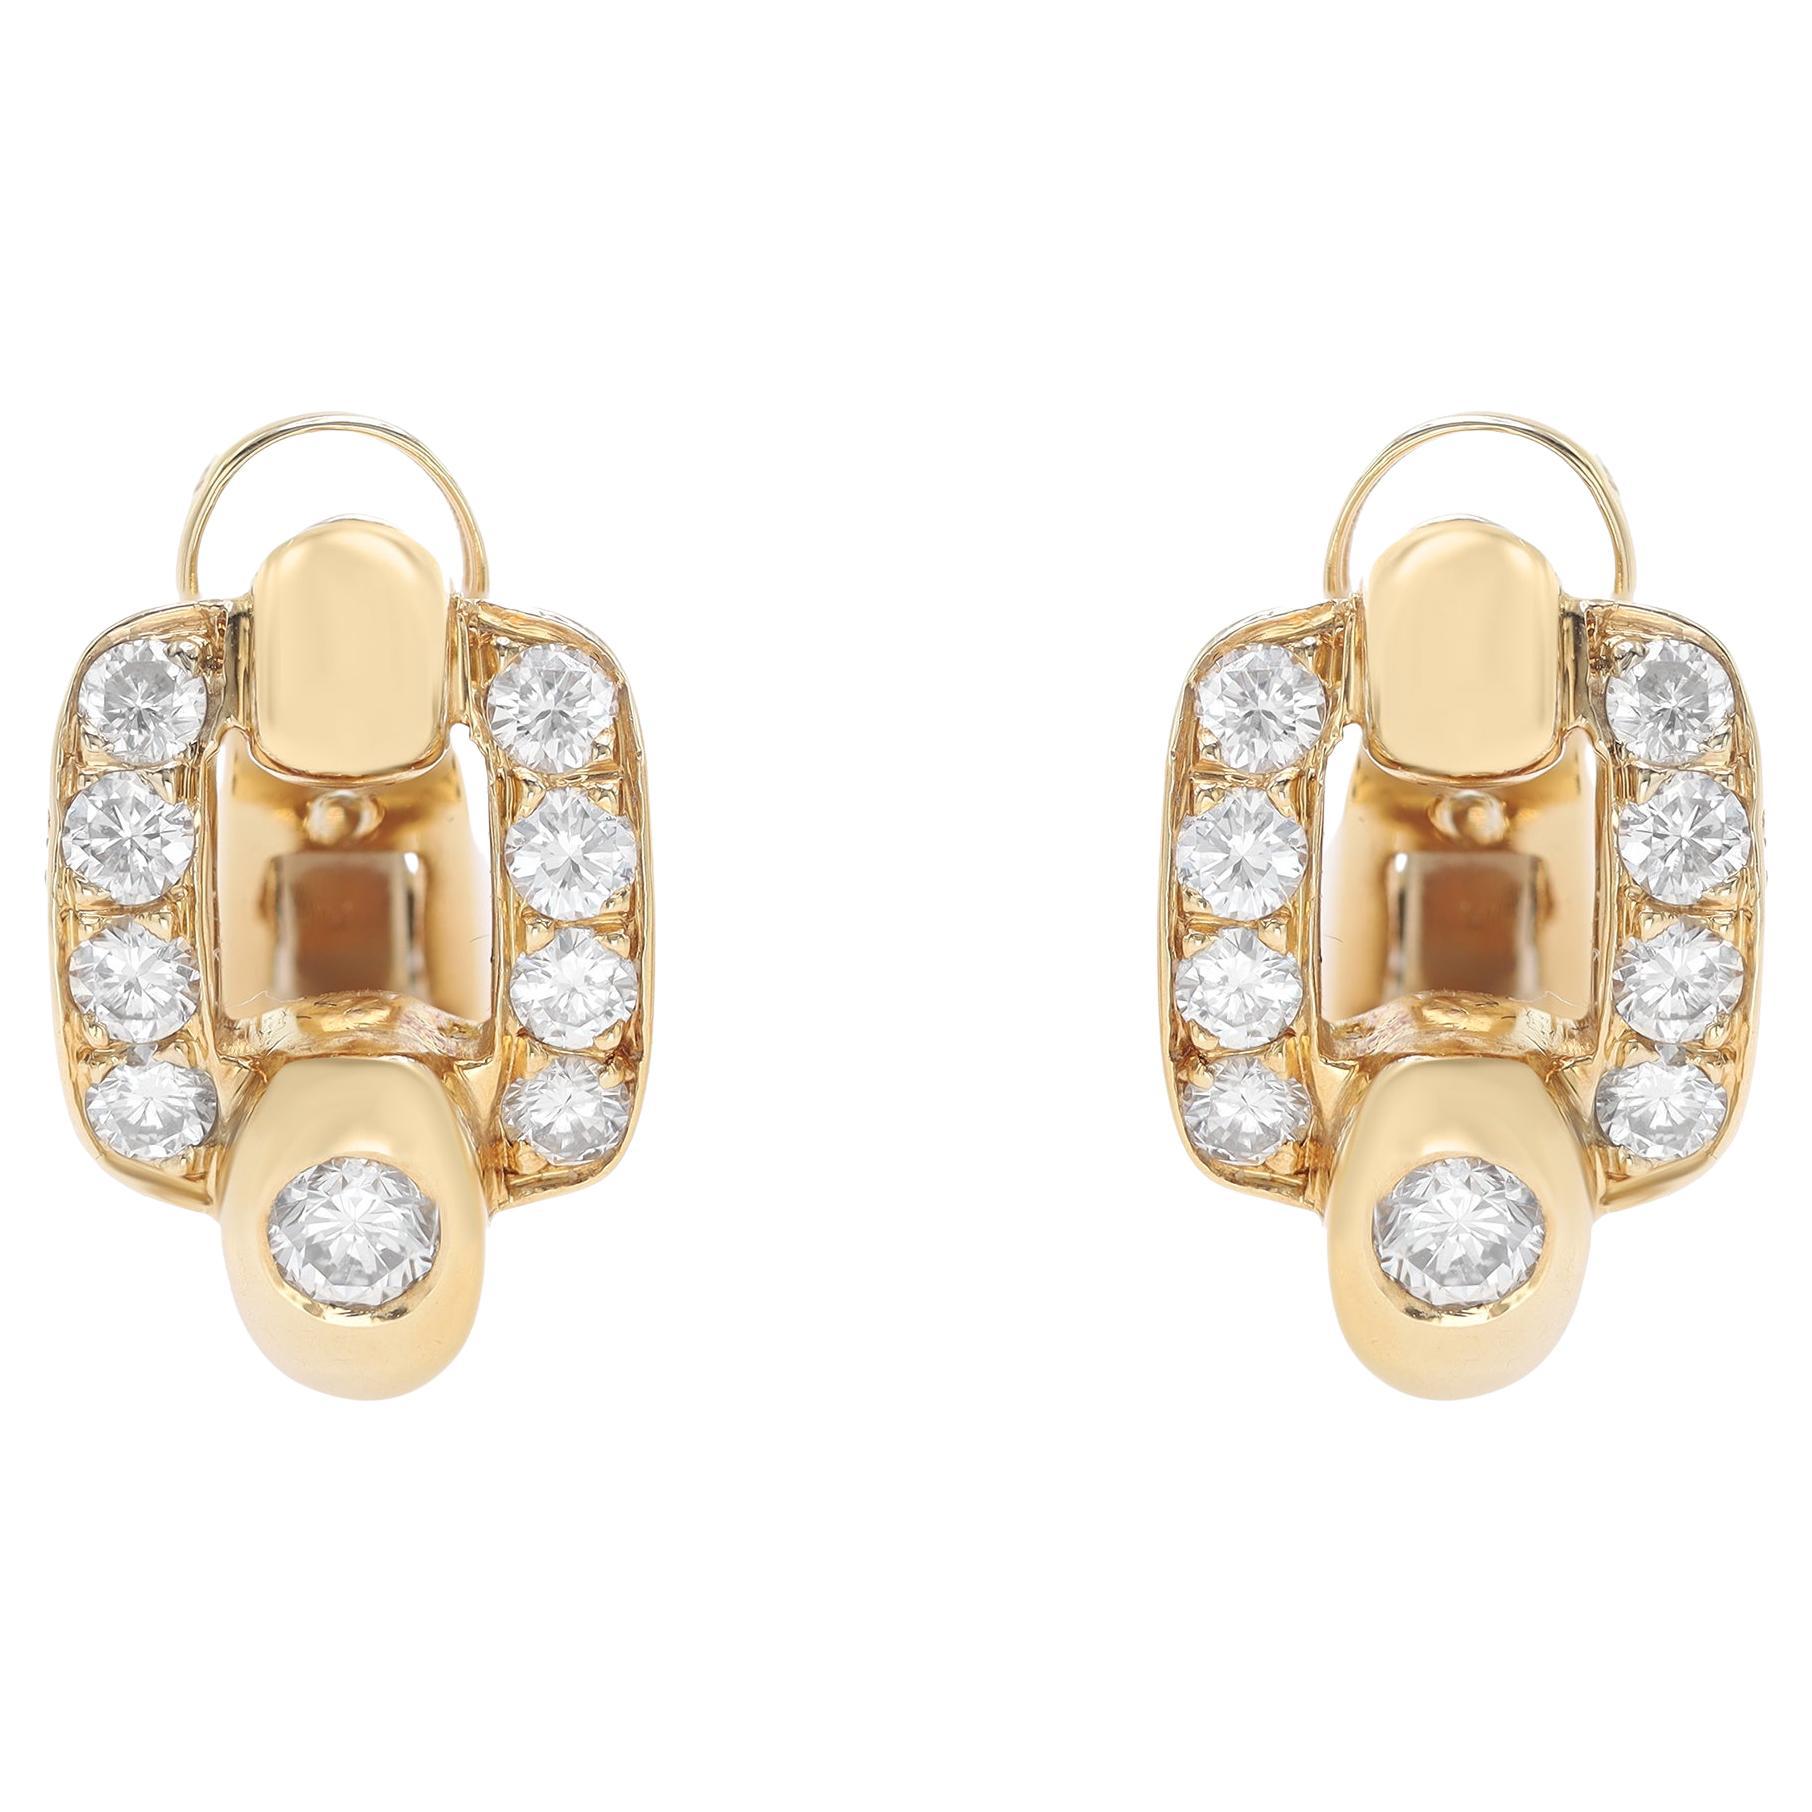 Cartier Diamond Clip Closure Stud Earrings 18K Yellow Gold 0.42cttw